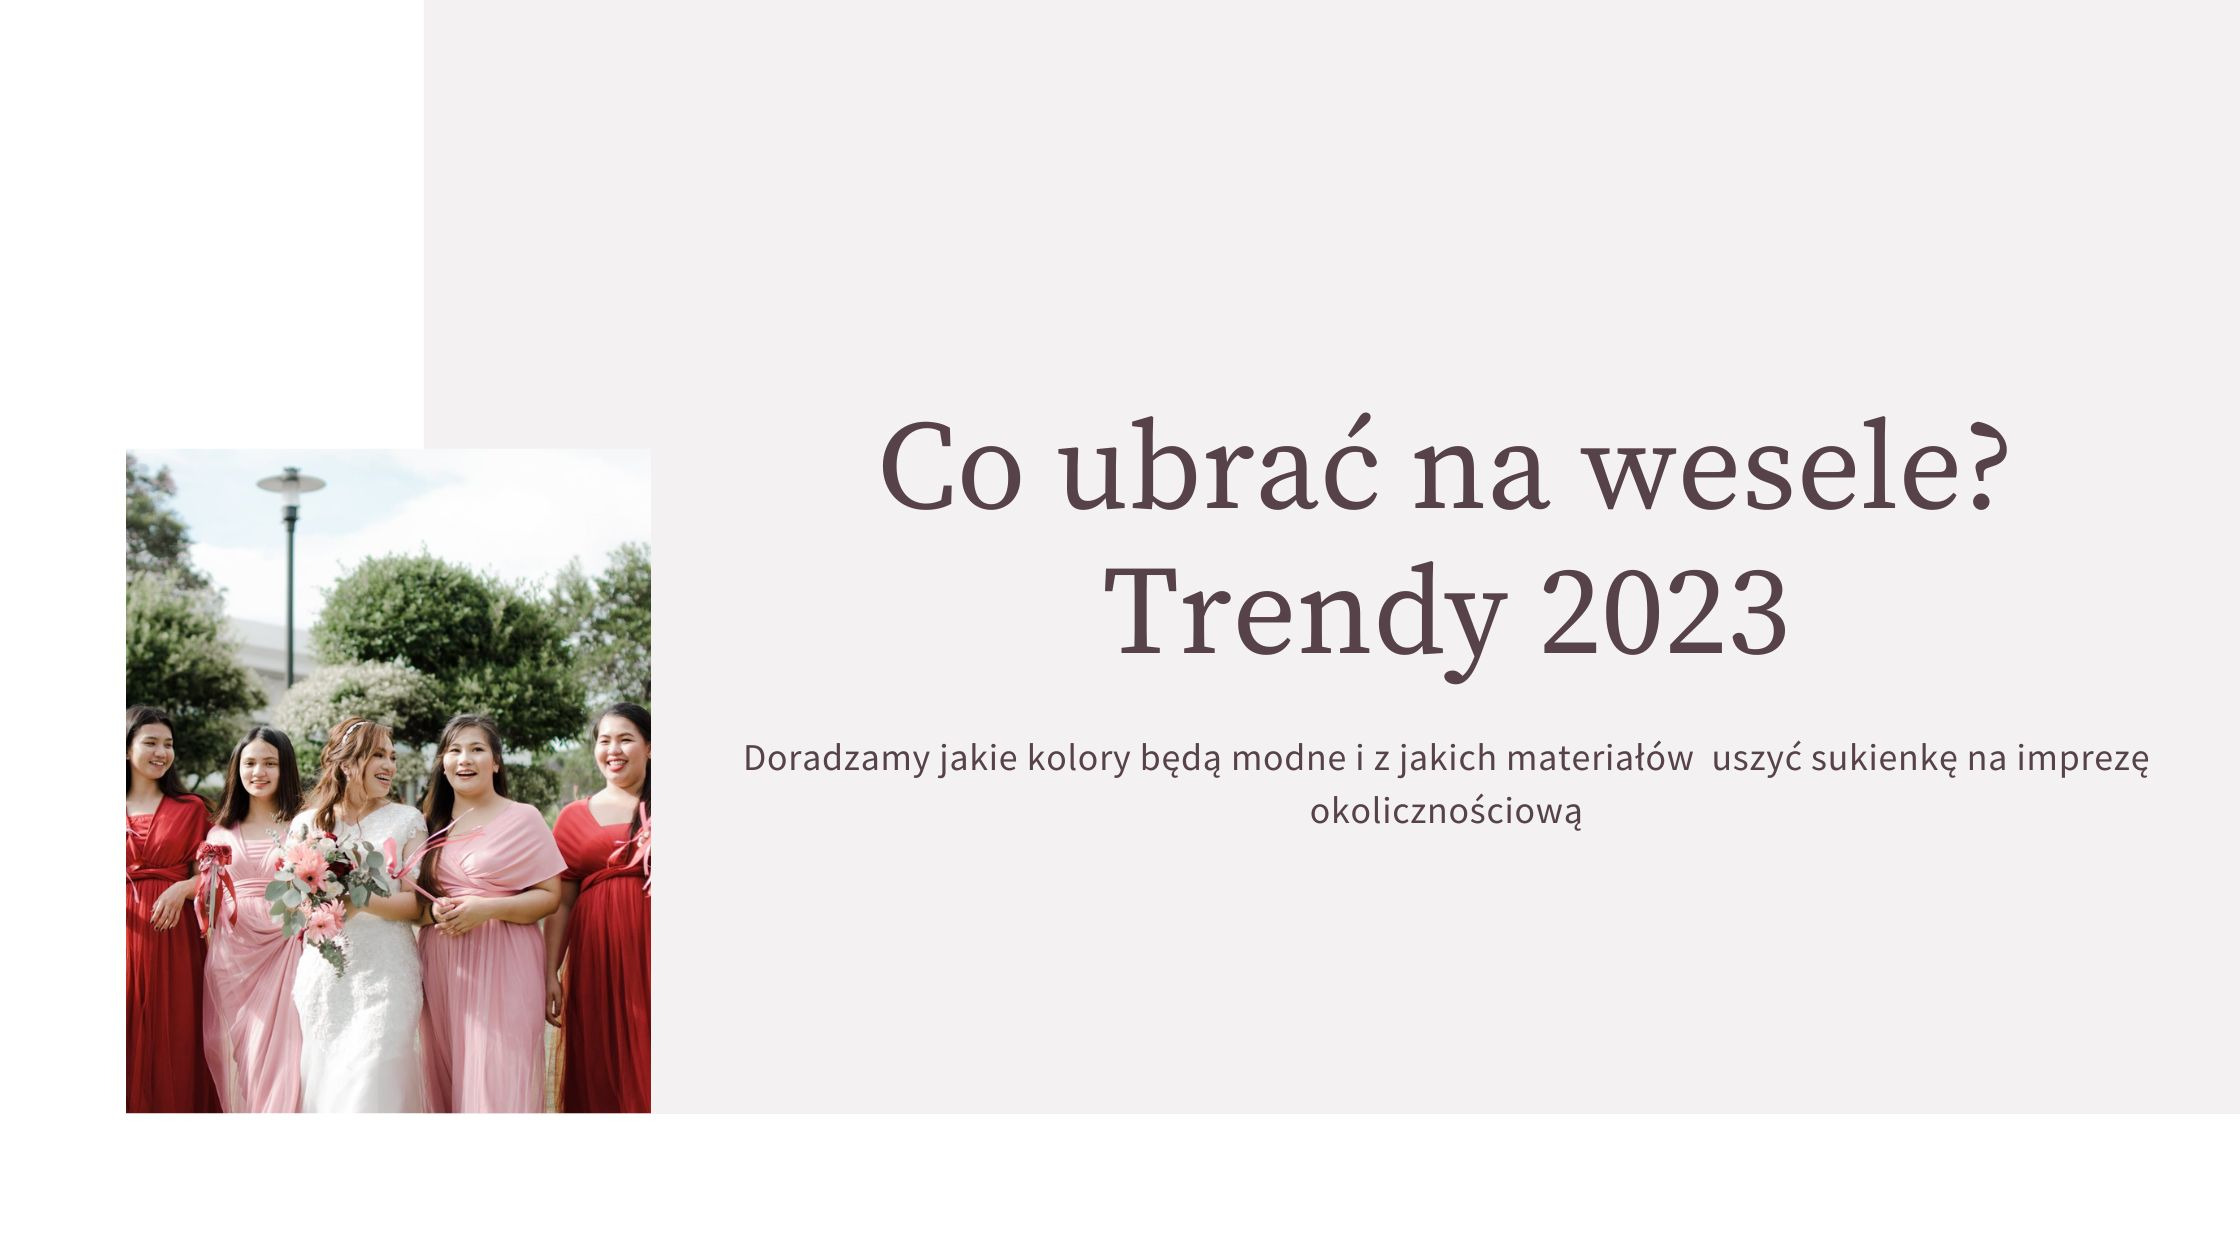 Co ubrać na wesele? Trendy 2023